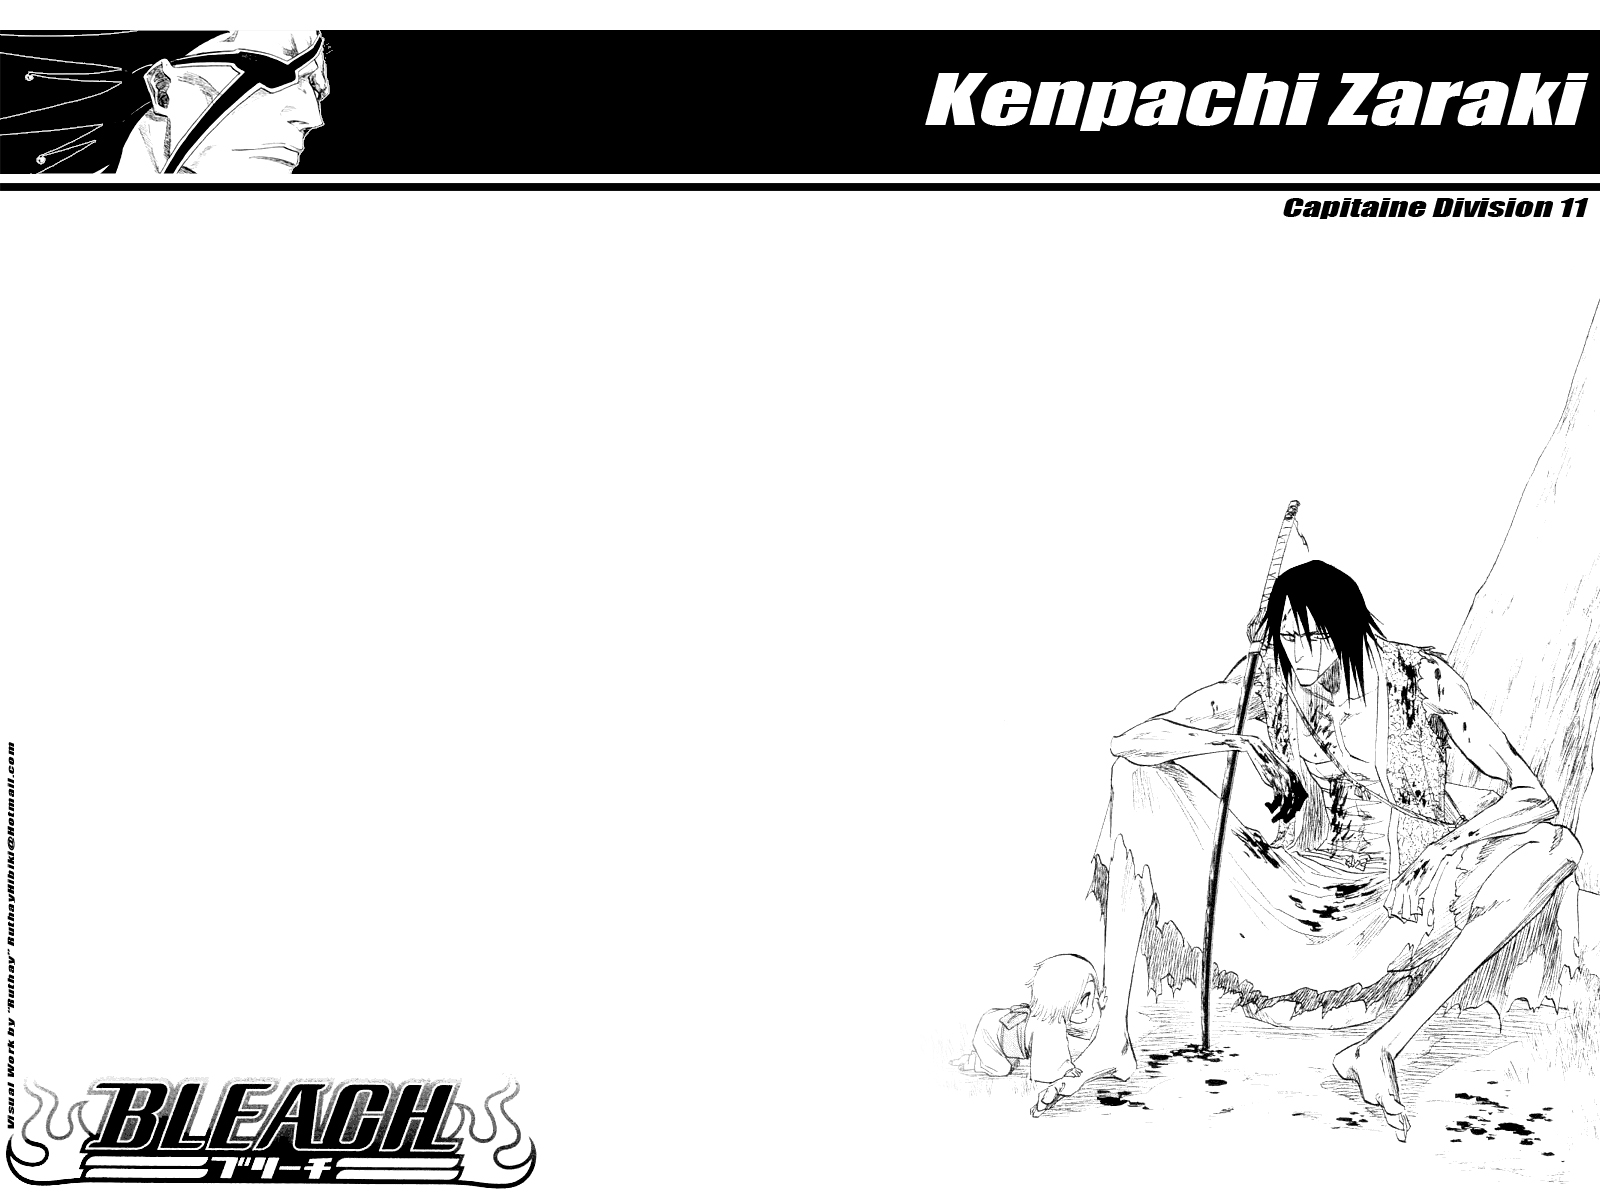 269057 Fondos de pantalla e Kenpachi Zaraki imágenes en el escritorio. Descarga protectores de pantalla  en tu PC gratis